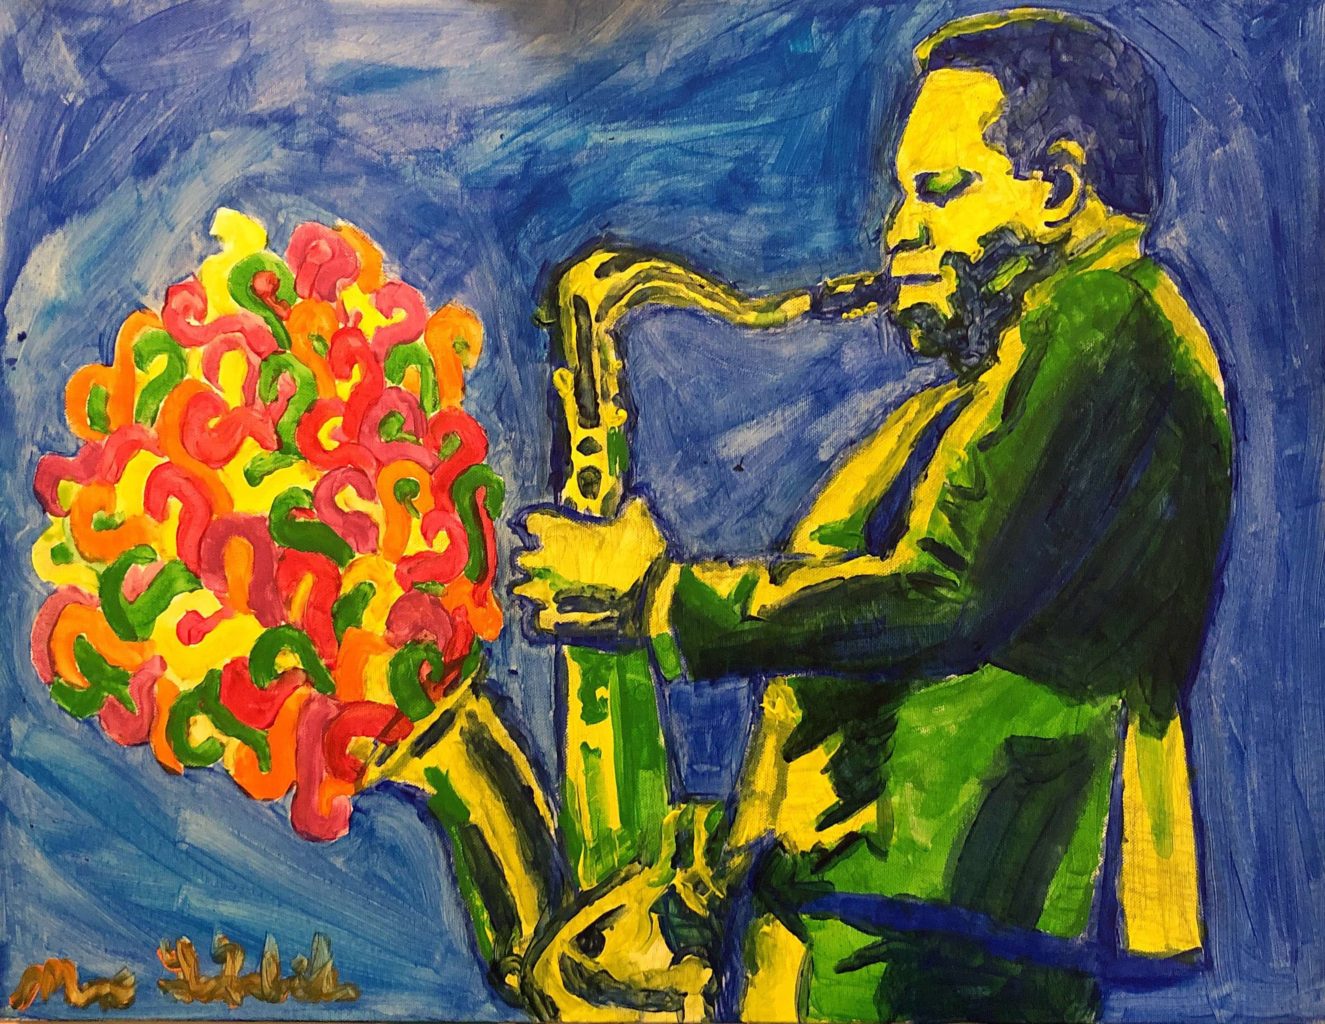 Surrebral Soulful Saxophone Painting